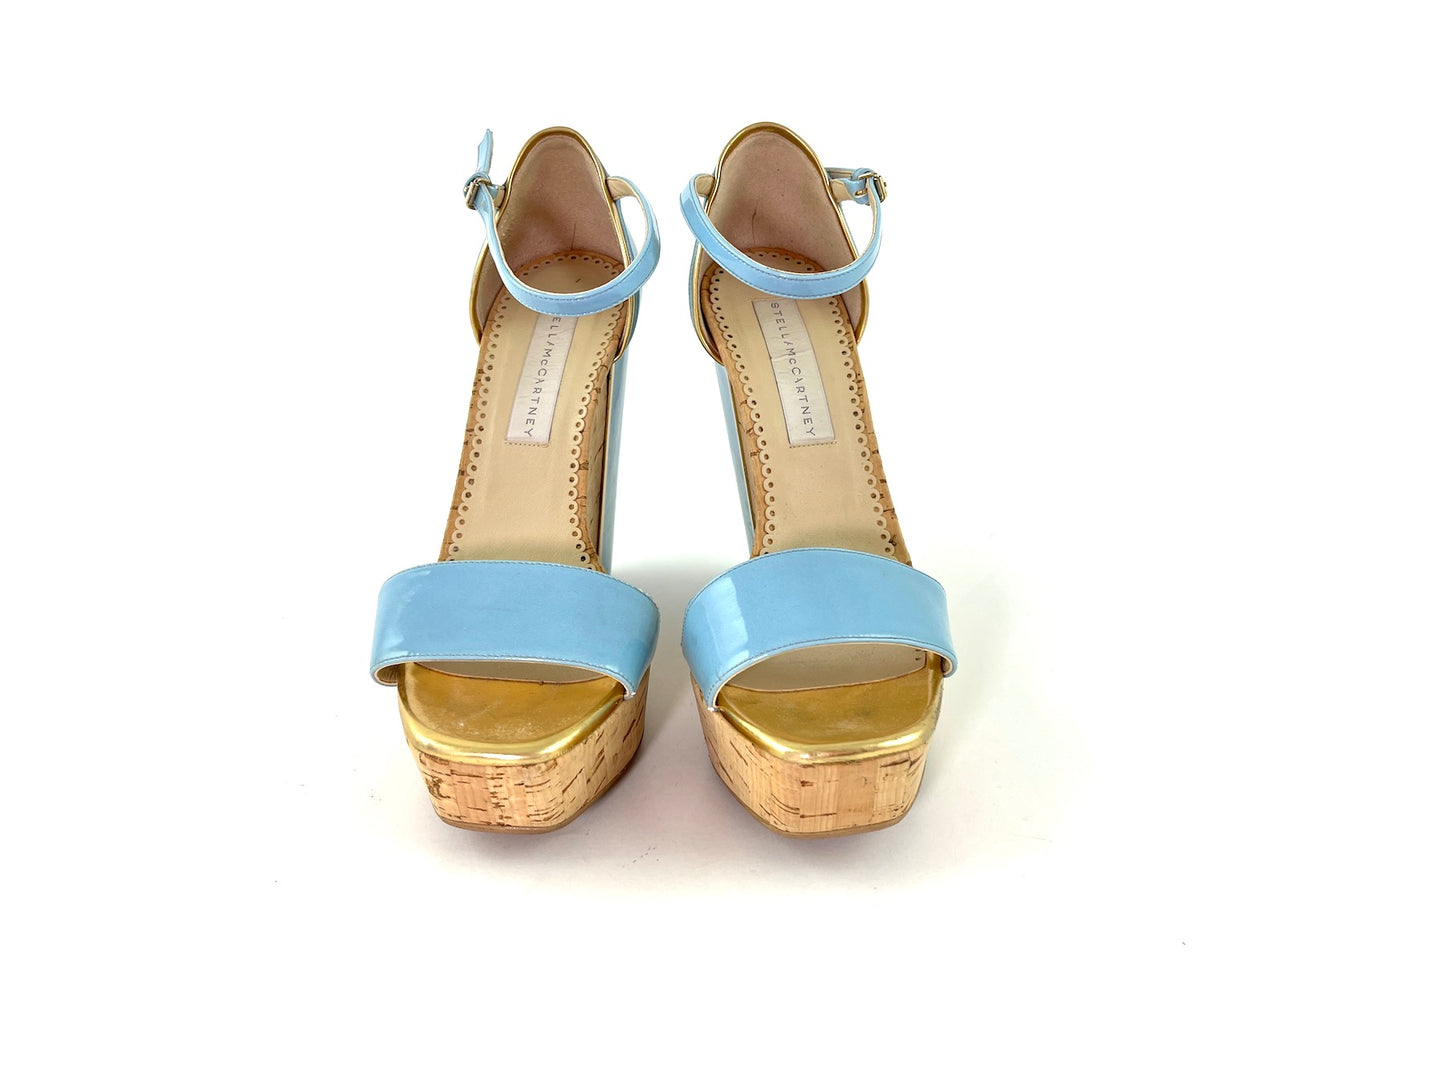 Stella McCartney Vegetarian Patent Leather Blue Wedge Platform Sandals 38 7.5